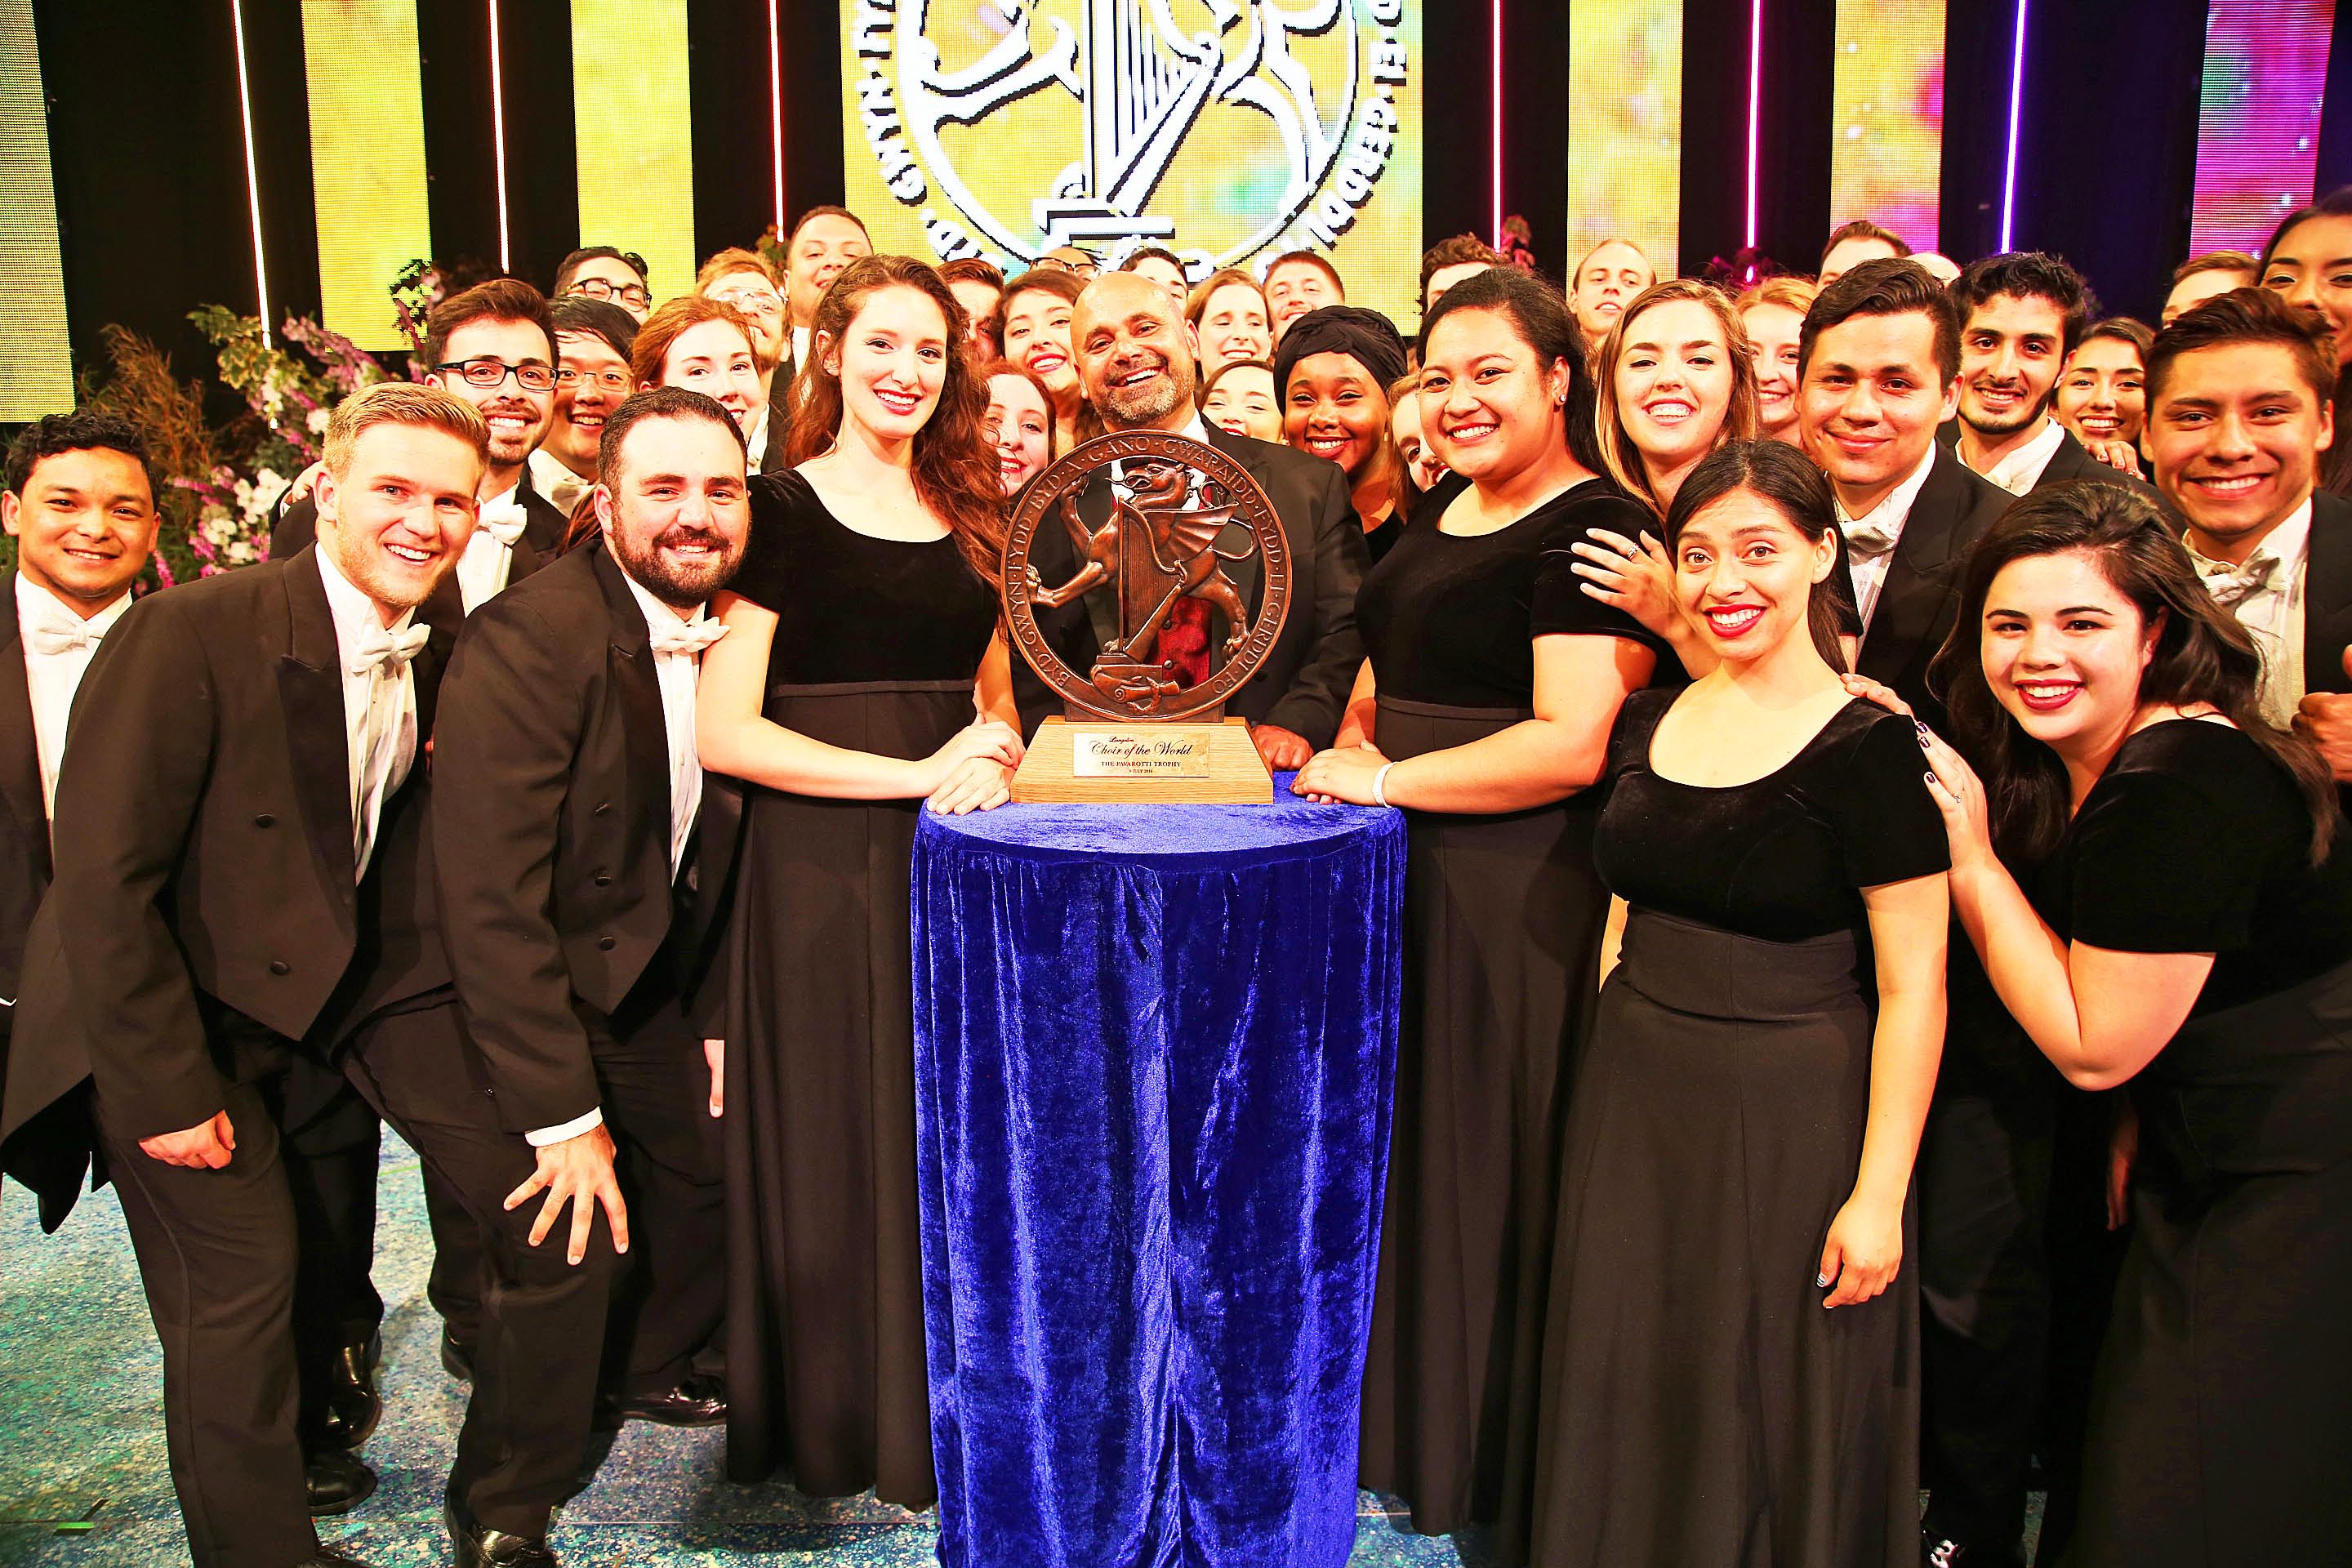 Californian gold rush as choir wins world crown